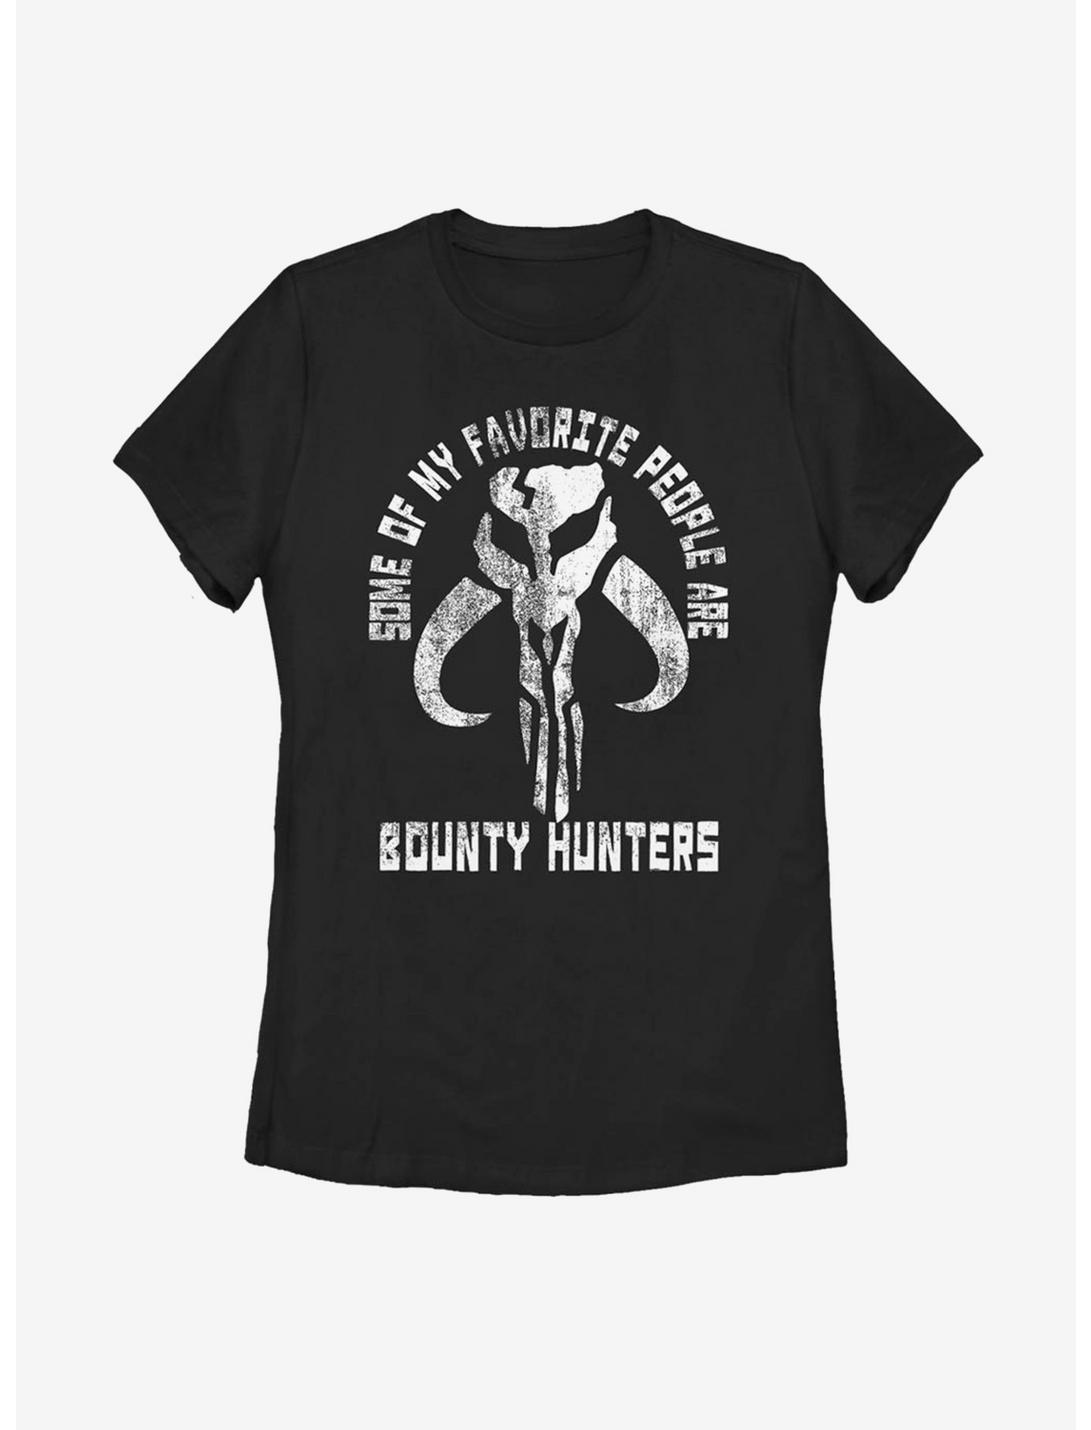 Plus Size Star Wars The Mandalorian Favorite People Bounty Hunters Womens T-Shirt, BLACK, hi-res